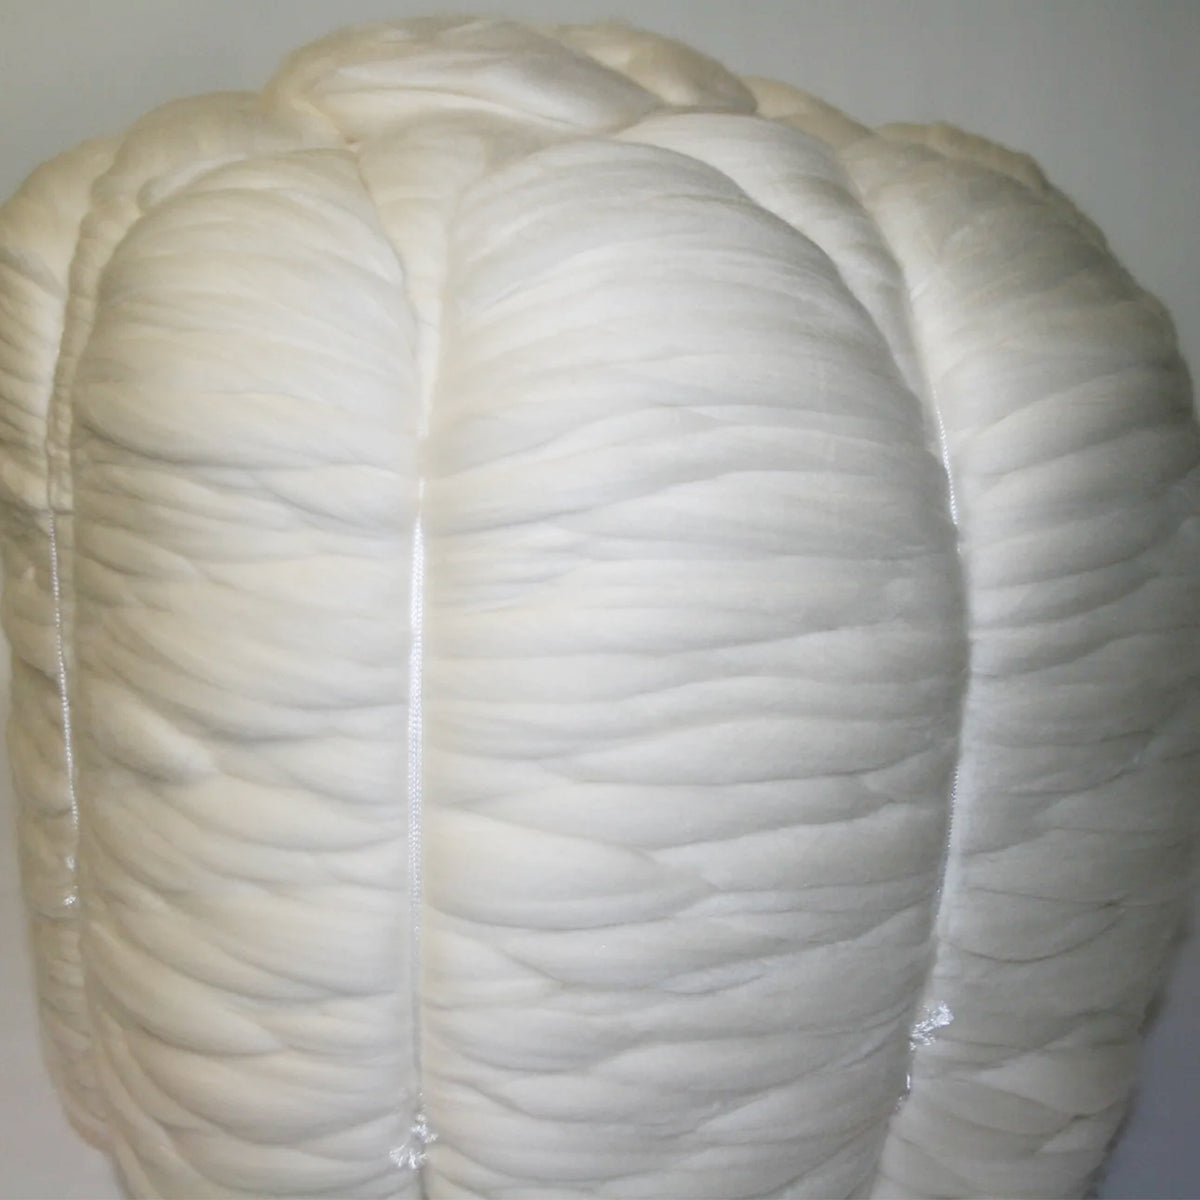 Merino Wool Top 17.5 Micron Natural 6kg